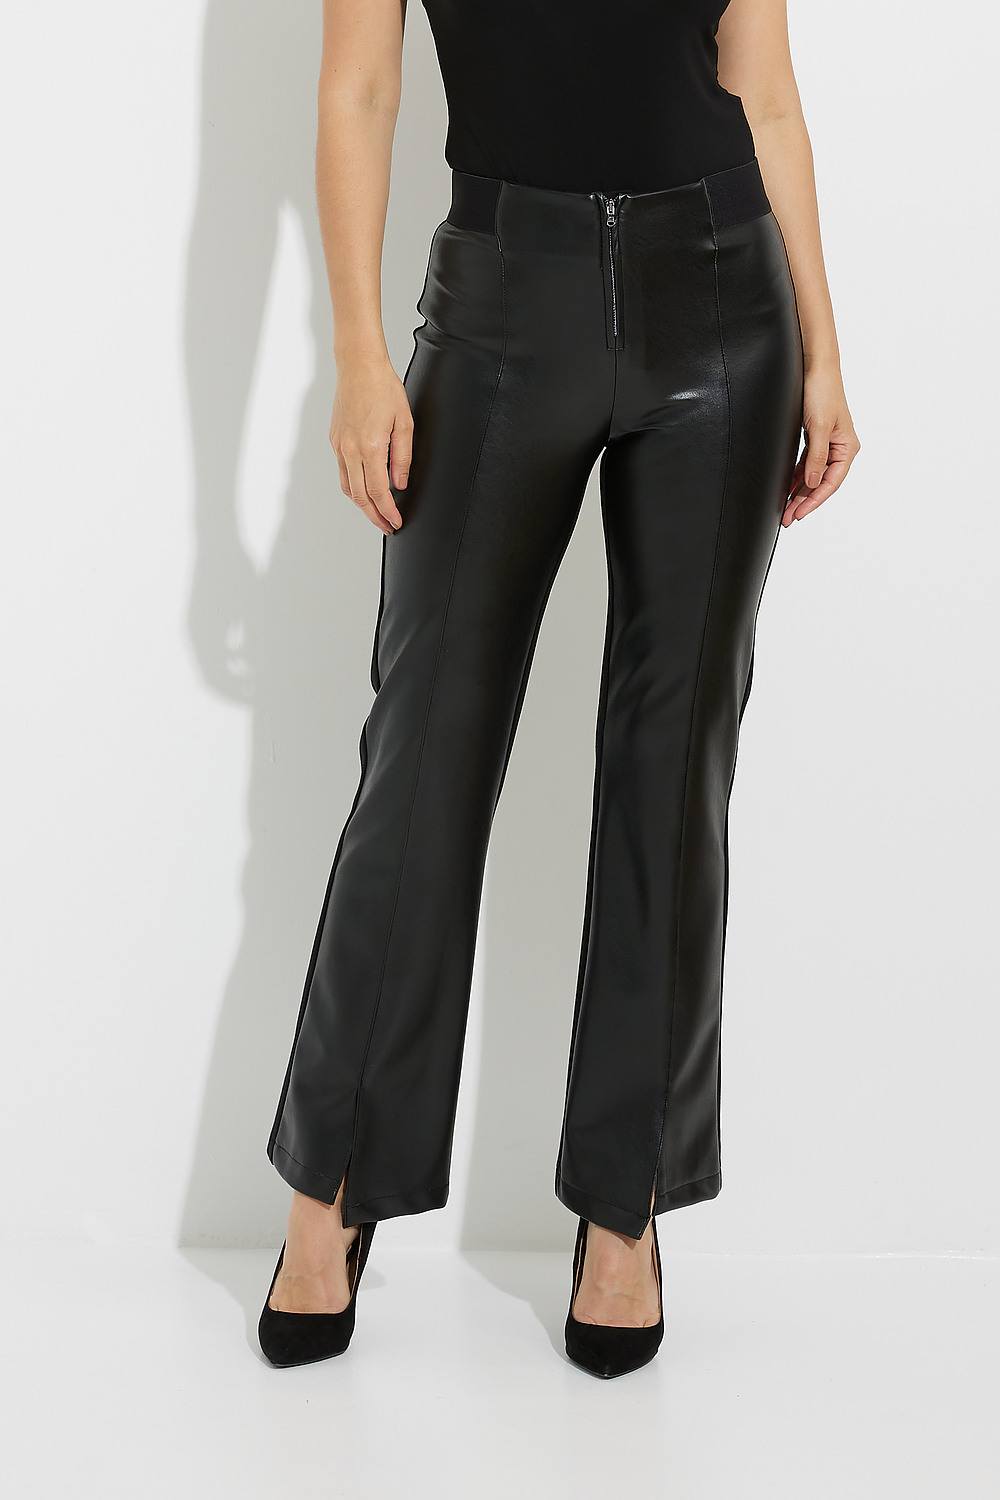 Joseph Ribkoff Leatherette Pants Style 224311. Black